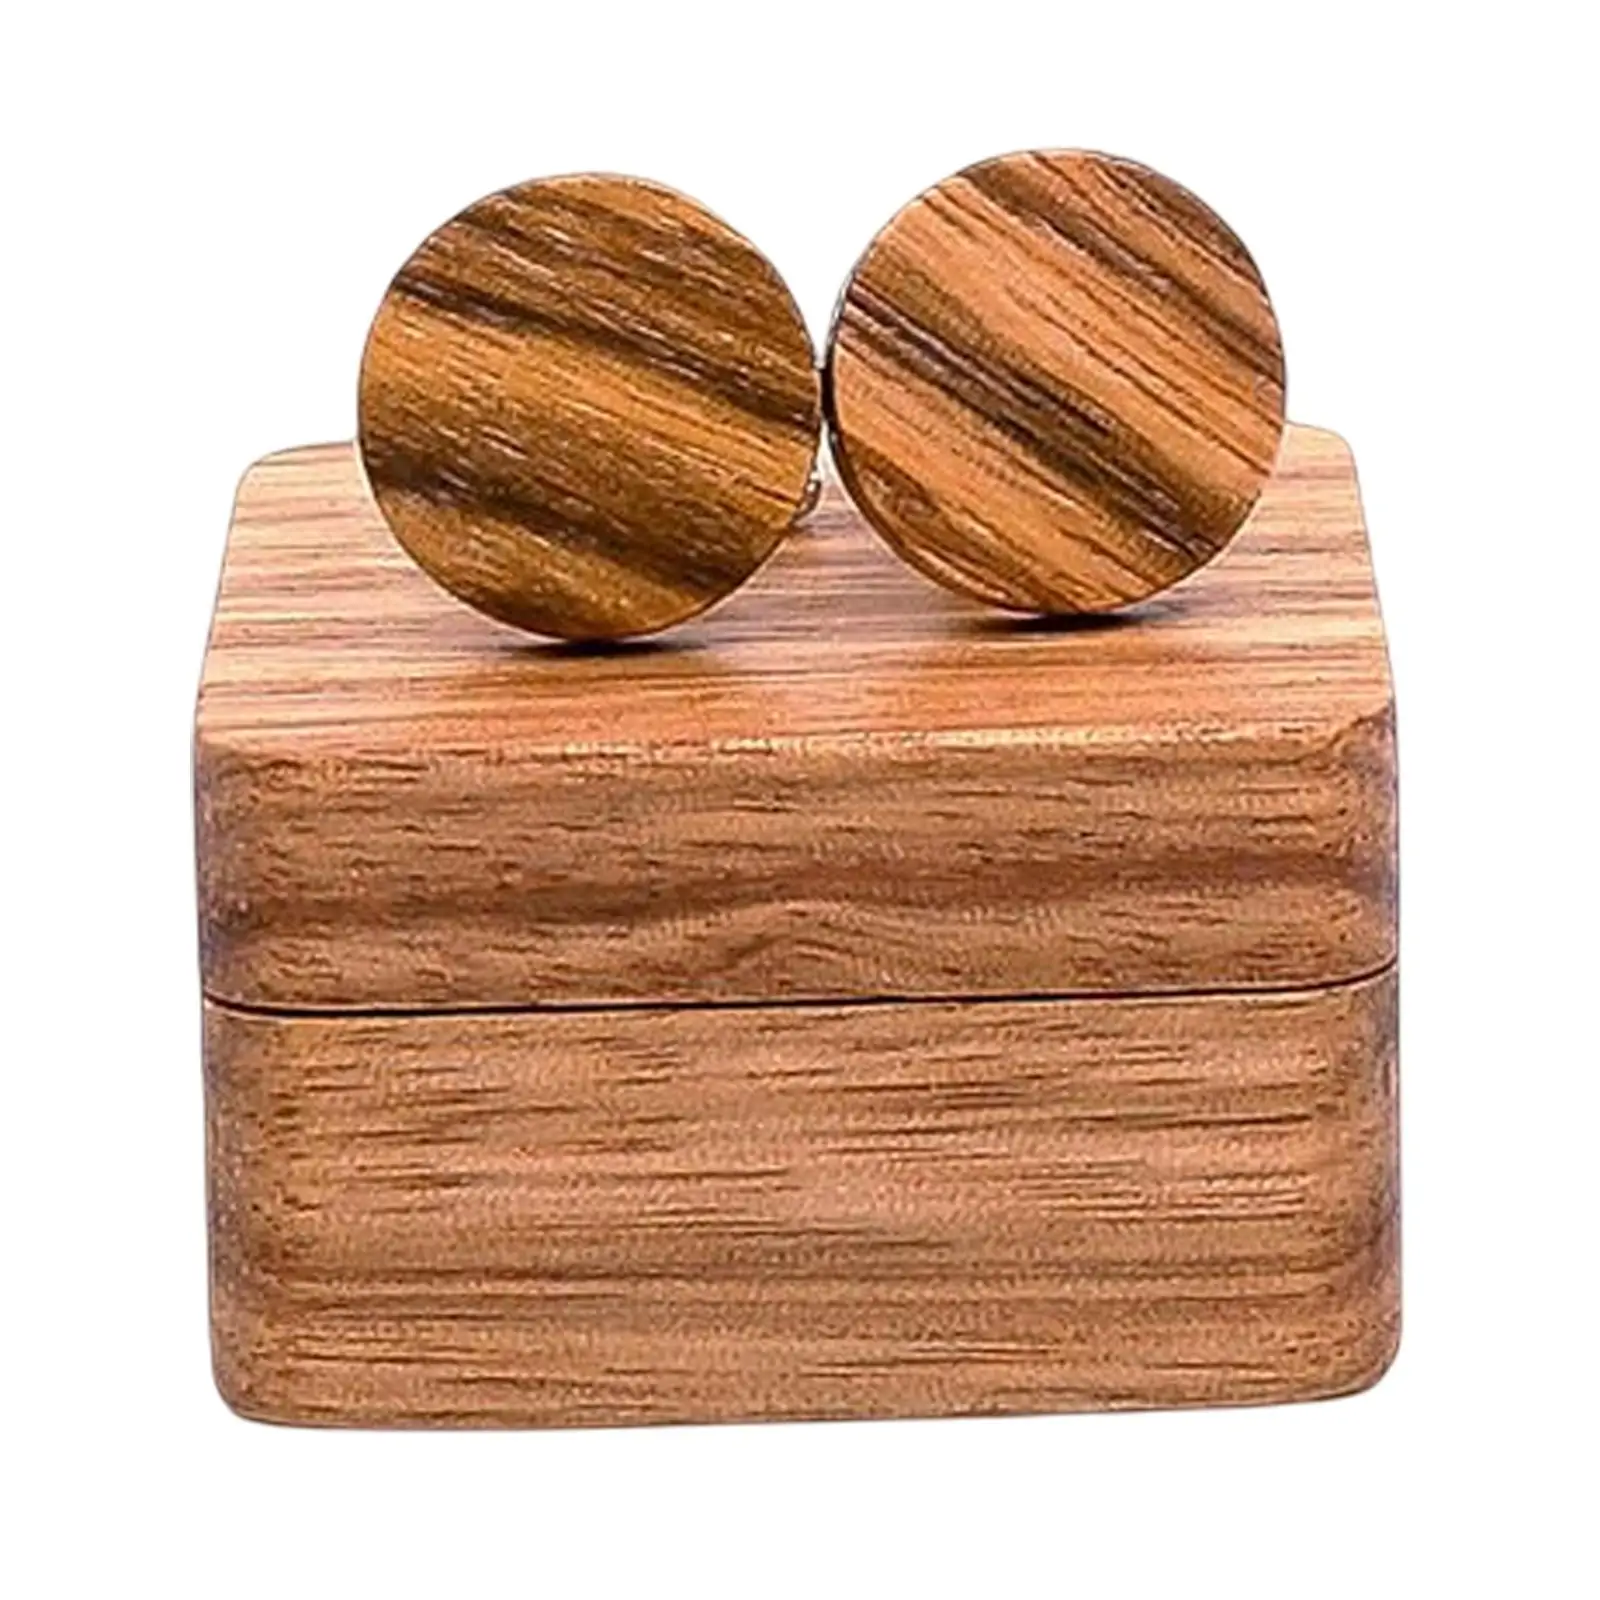 Rustic Wooden Round Cufflinks with Organizer Box Handsome Cuff Links for Anniversary Men Husband Wedding Bussiness